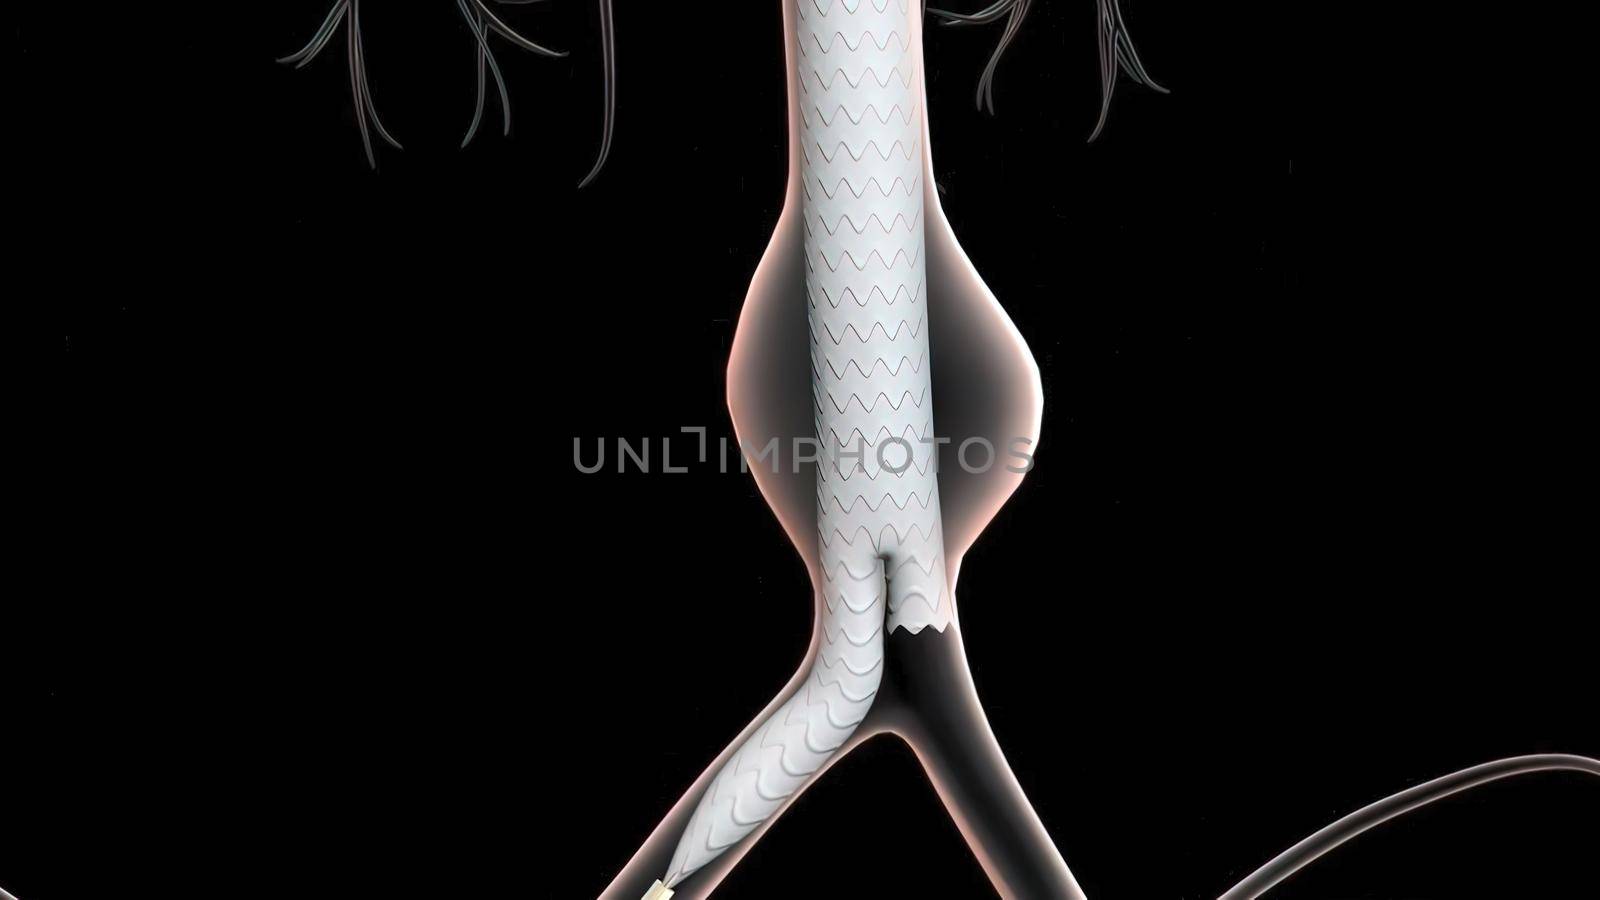 3D medical illustration of pulsatile Abdominal Aortic Aneurysm